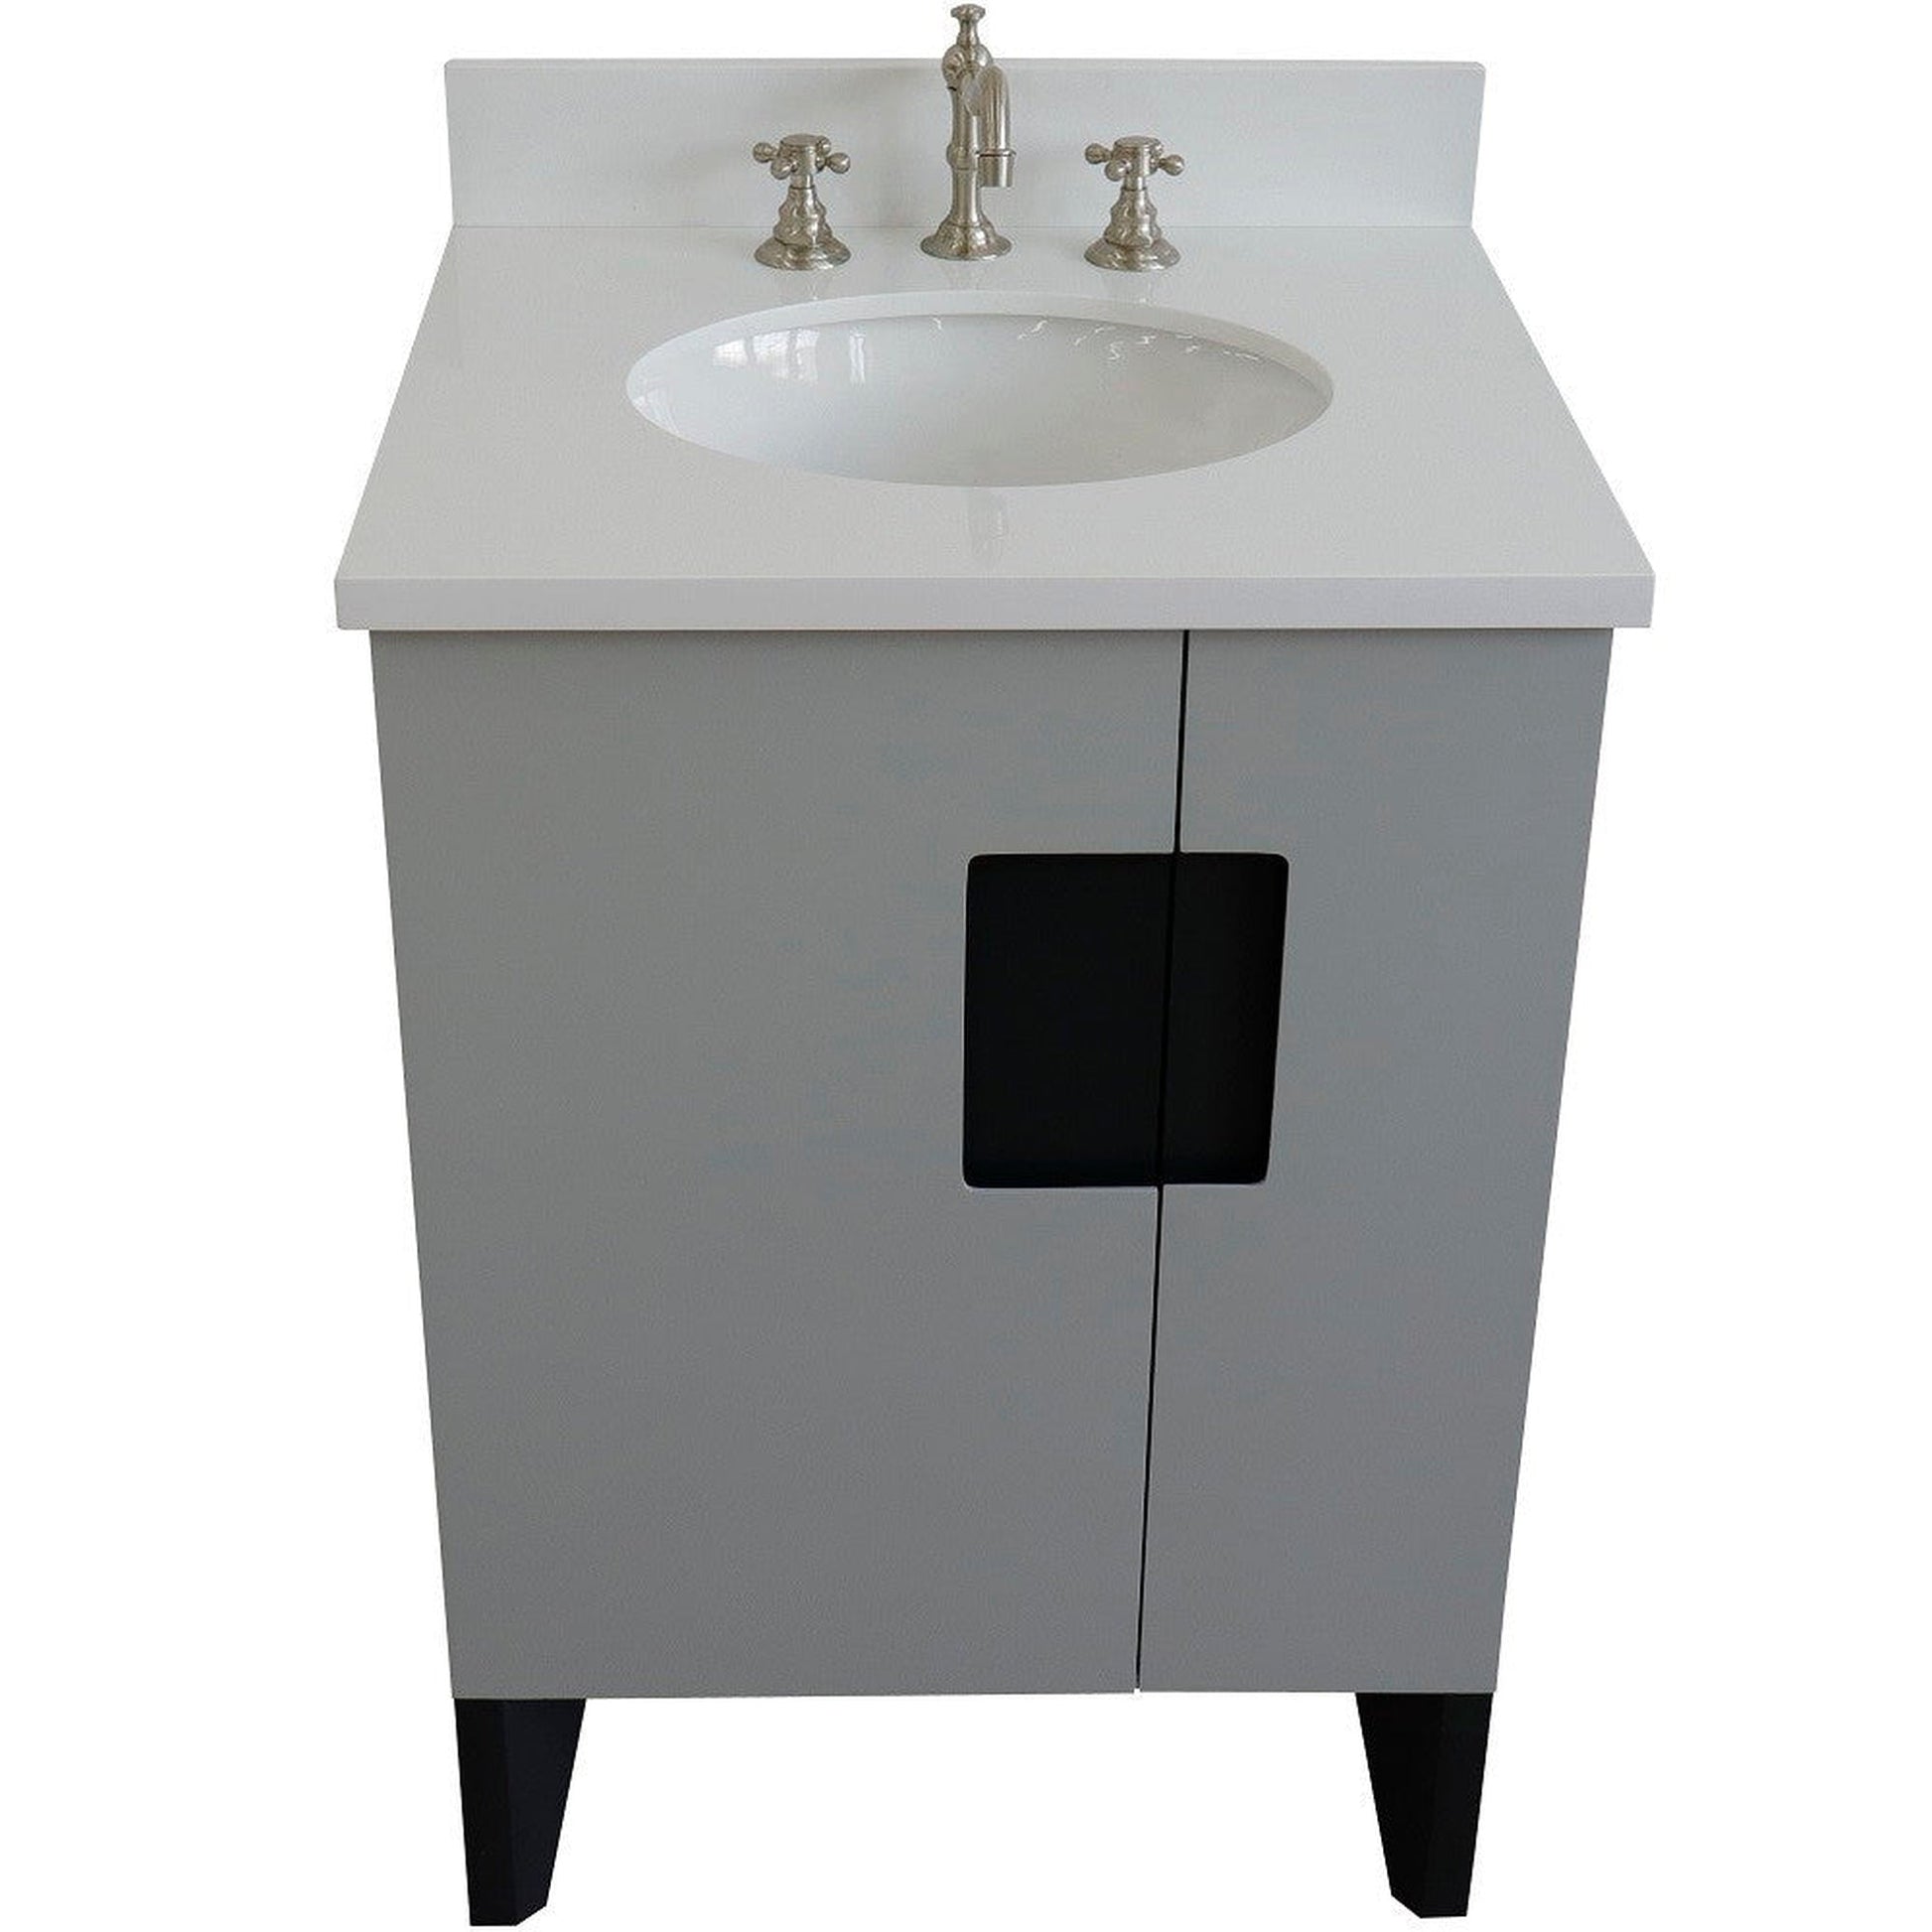 Bellaterra Home Kolb 25" 2-Door 1-Drawer Light Gray Freestanding Vanity Set With Ceramic Undermount Oval Sink and White Quartz Top